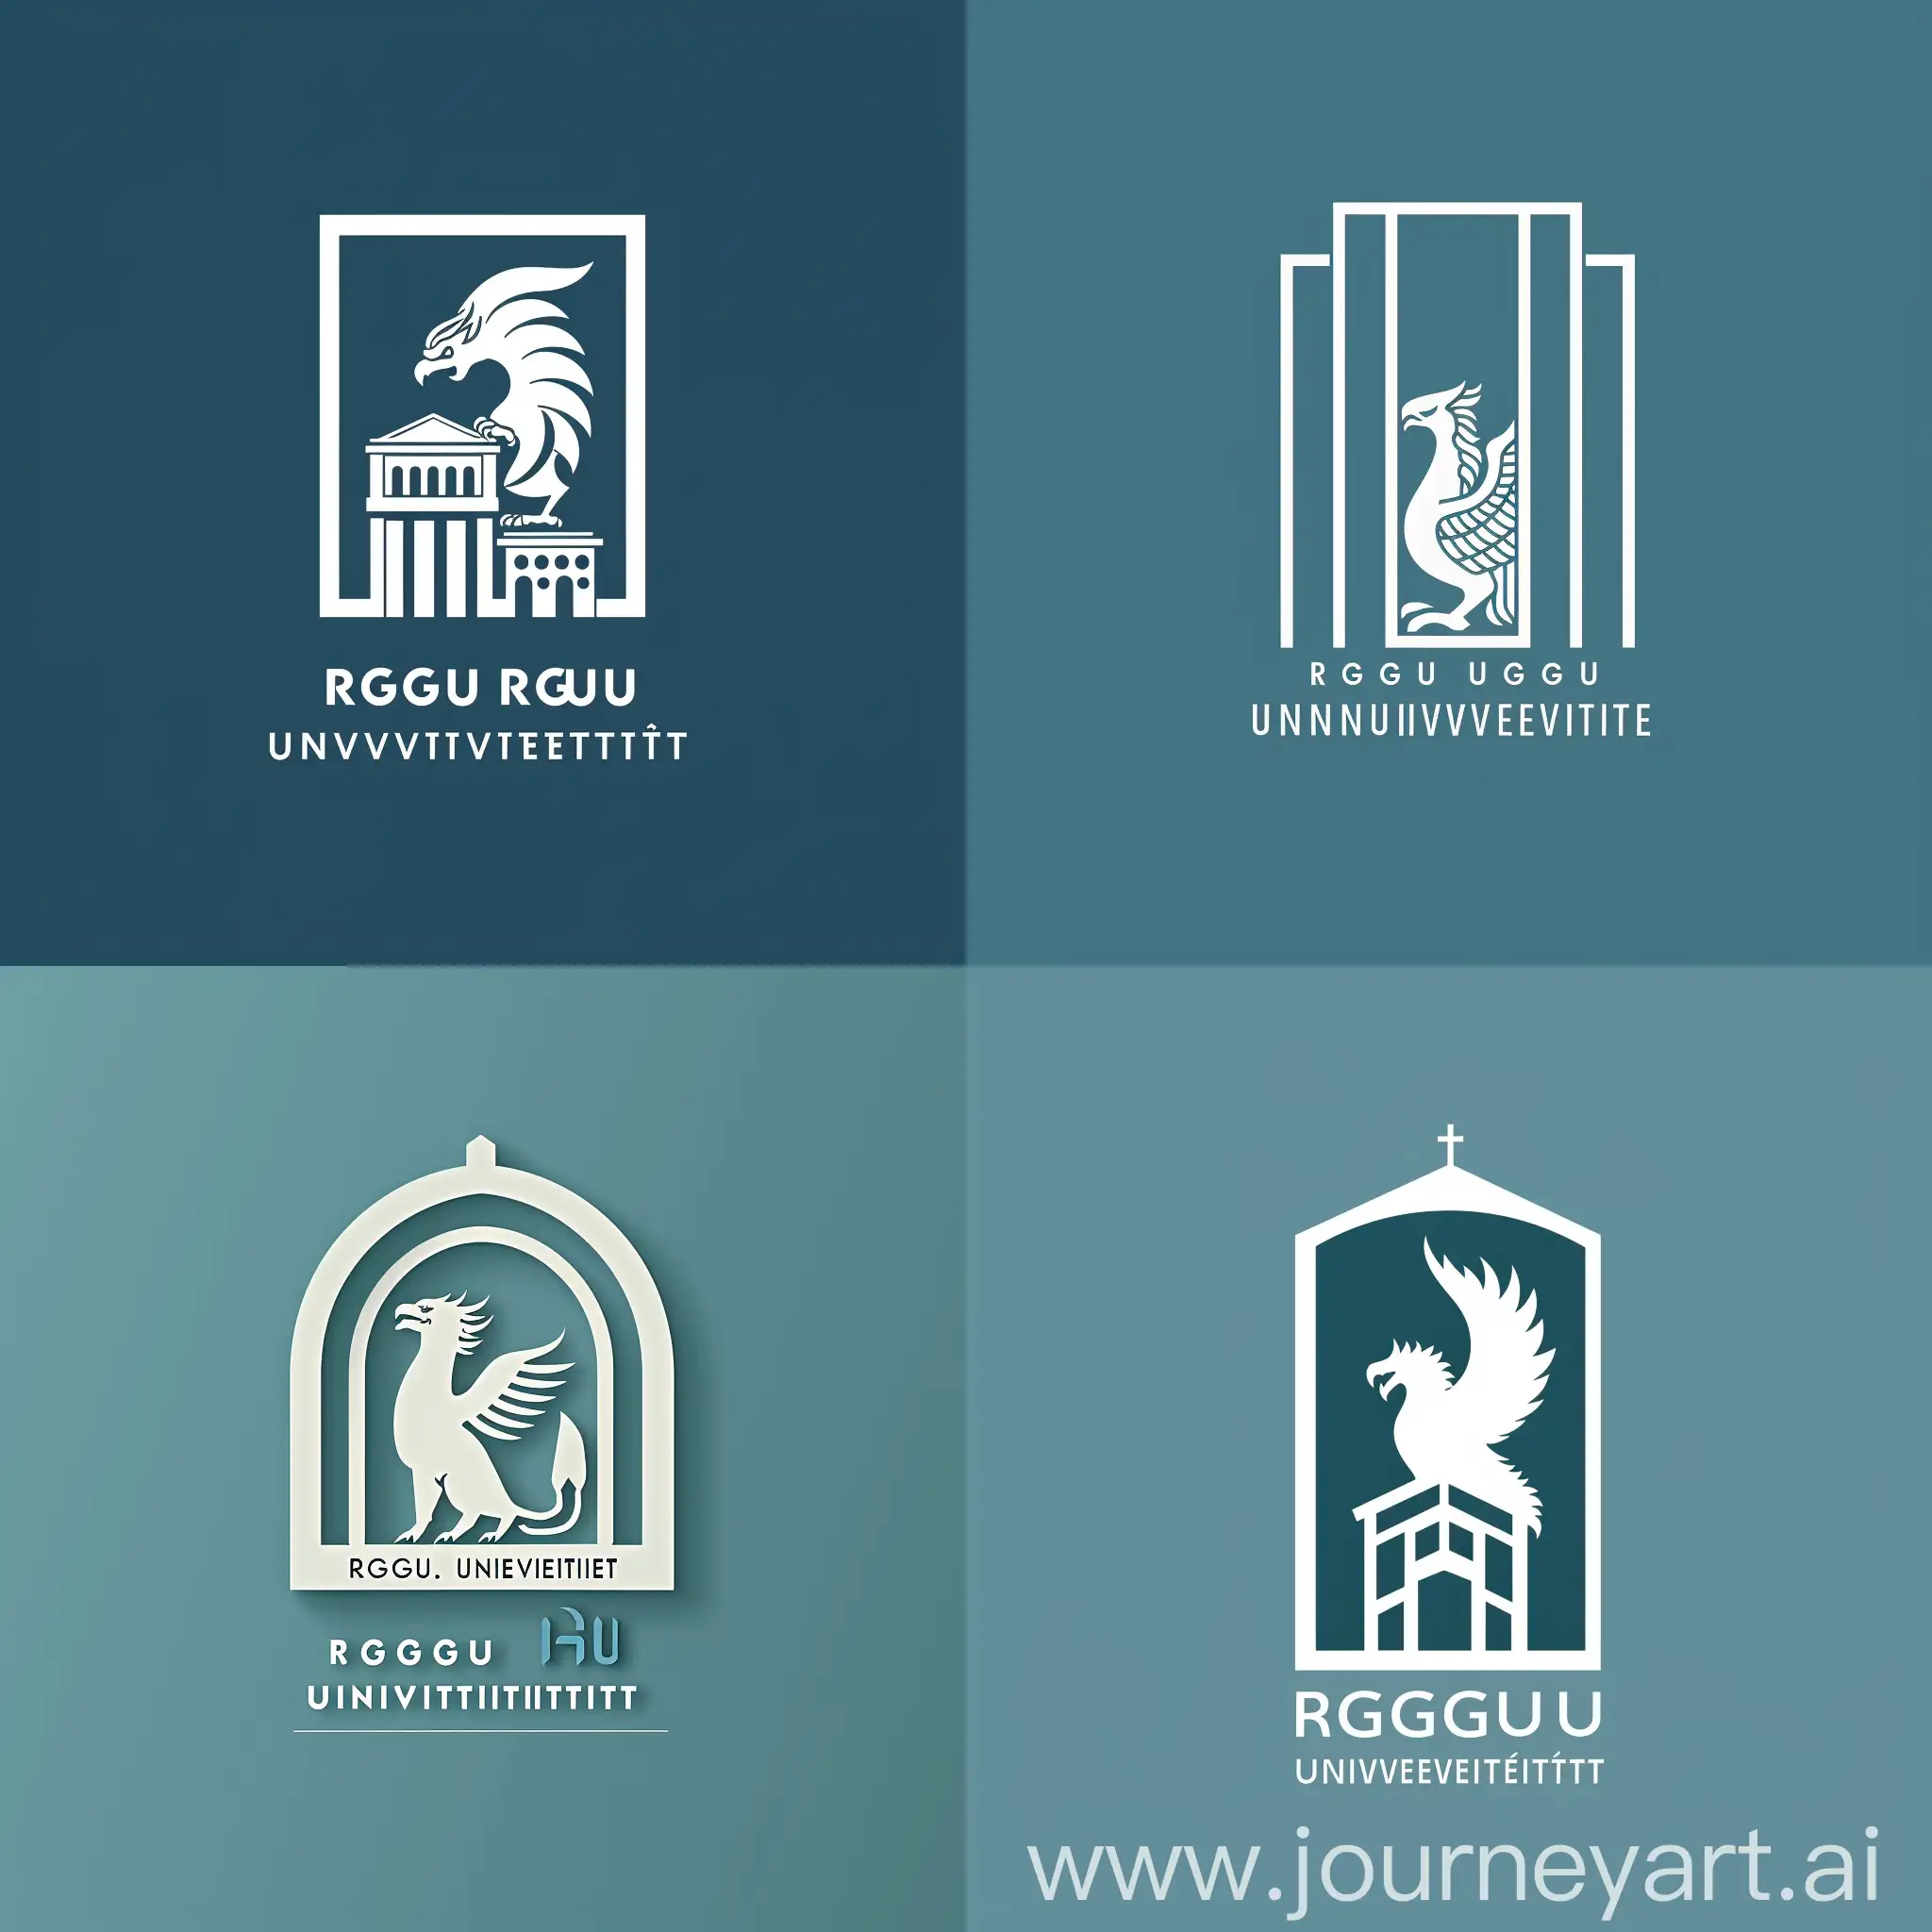 Minimalistic-Griffin-Logo-Inside-Building-for-RGGU-Universitet